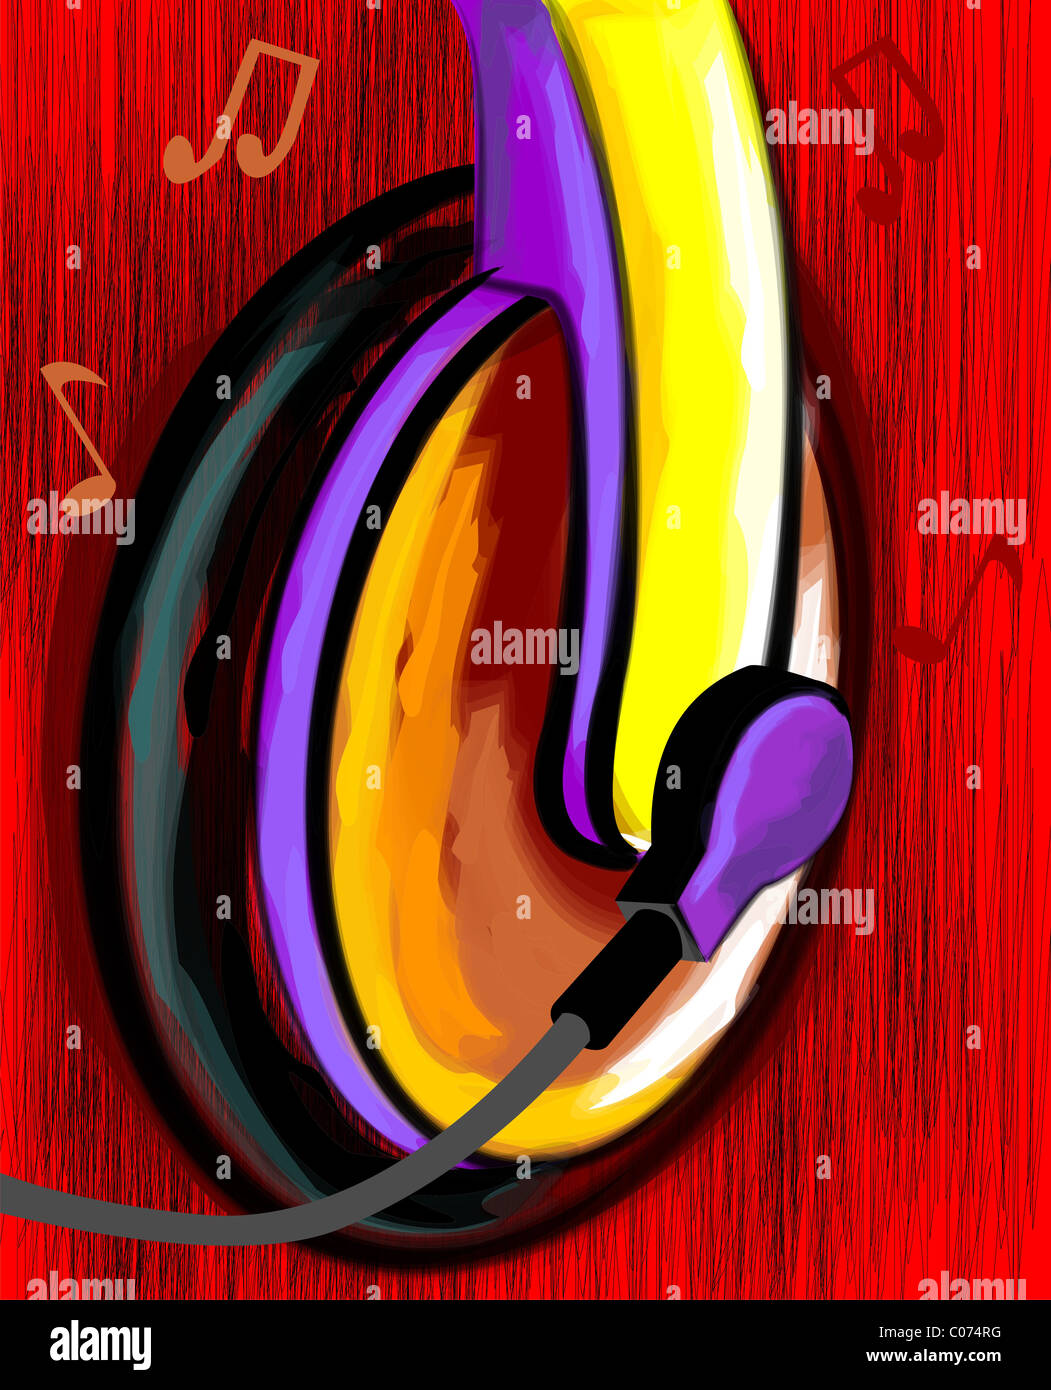 Digital painting of an ear phone. The artist is feeling the sense of enjoying music. Stock Photo